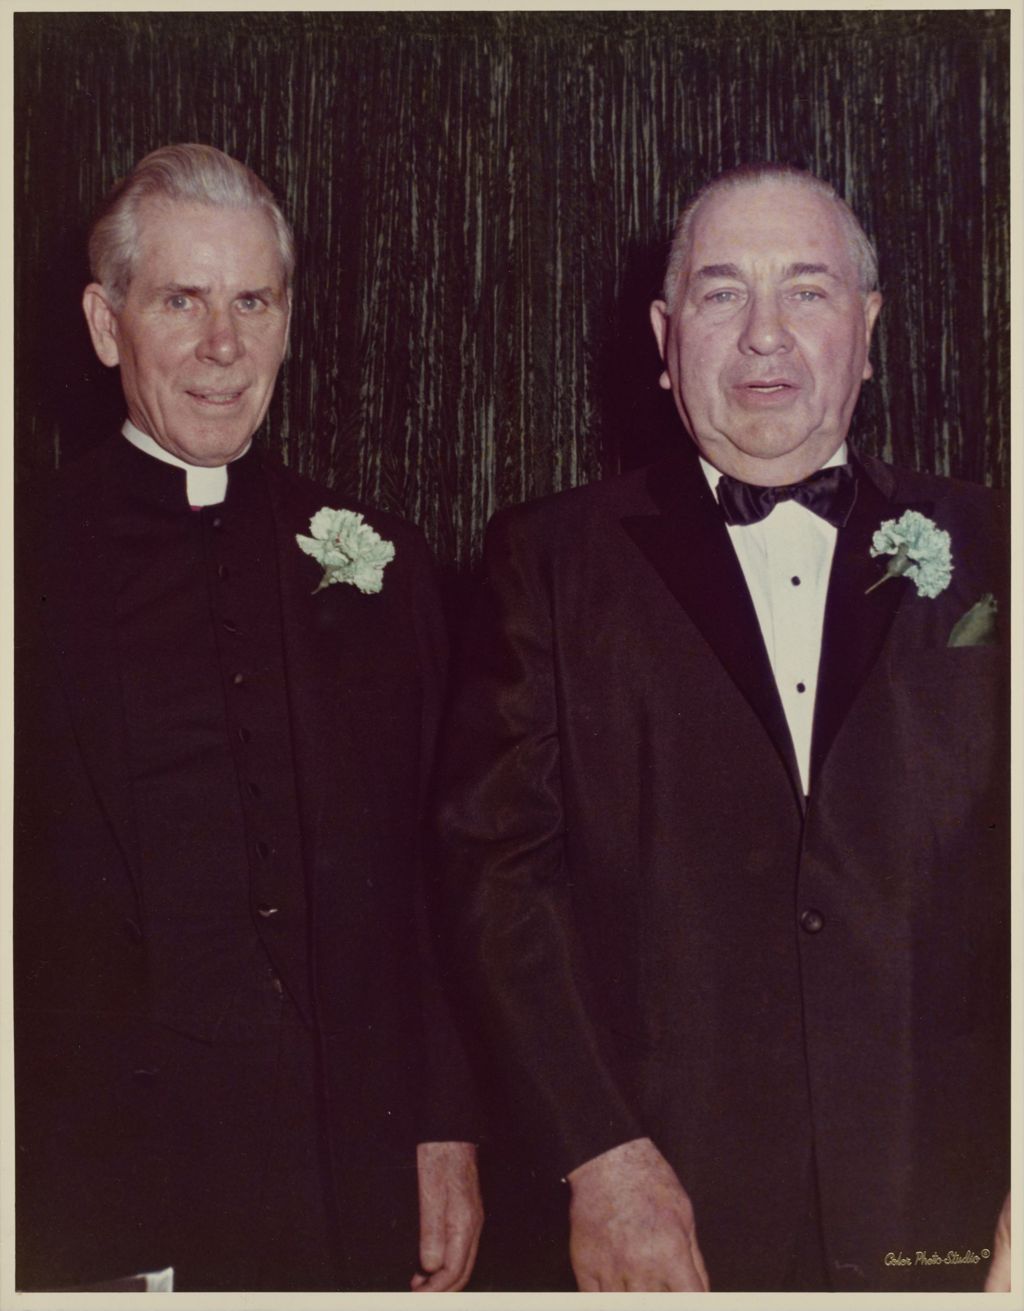 Miniature of Richard J. Daley and Bishop Fulton J. Sheen